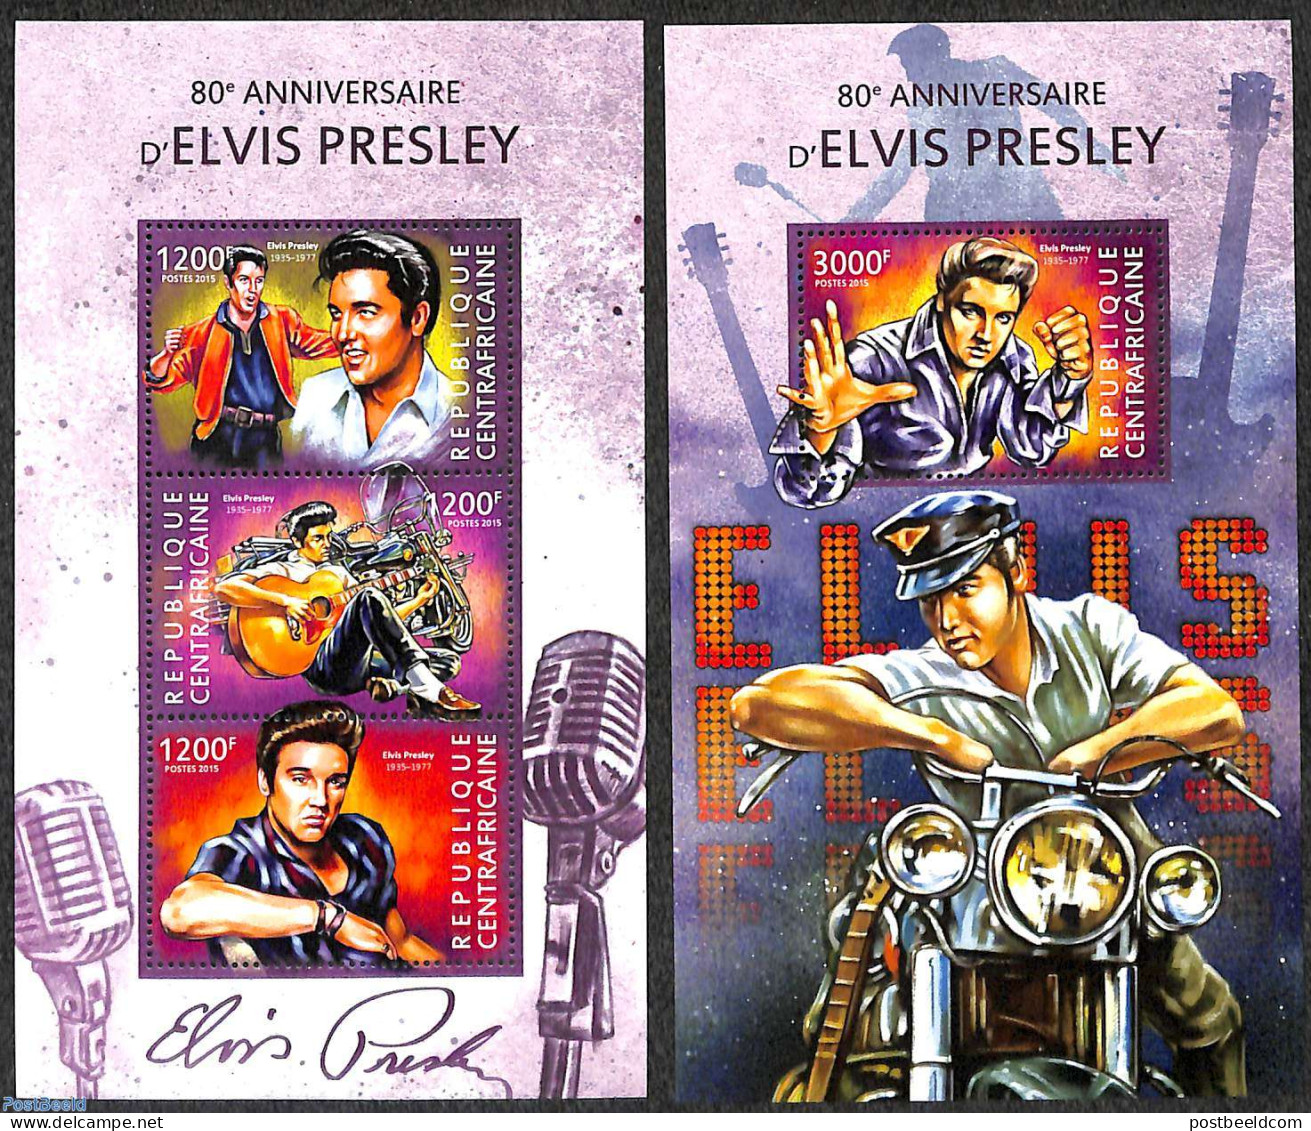 Central Africa 2015 Elvis Presley 2 S/s, Mint NH, Performance Art - Transport - Elvis Presley - Music - Motorcycles - Elvis Presley